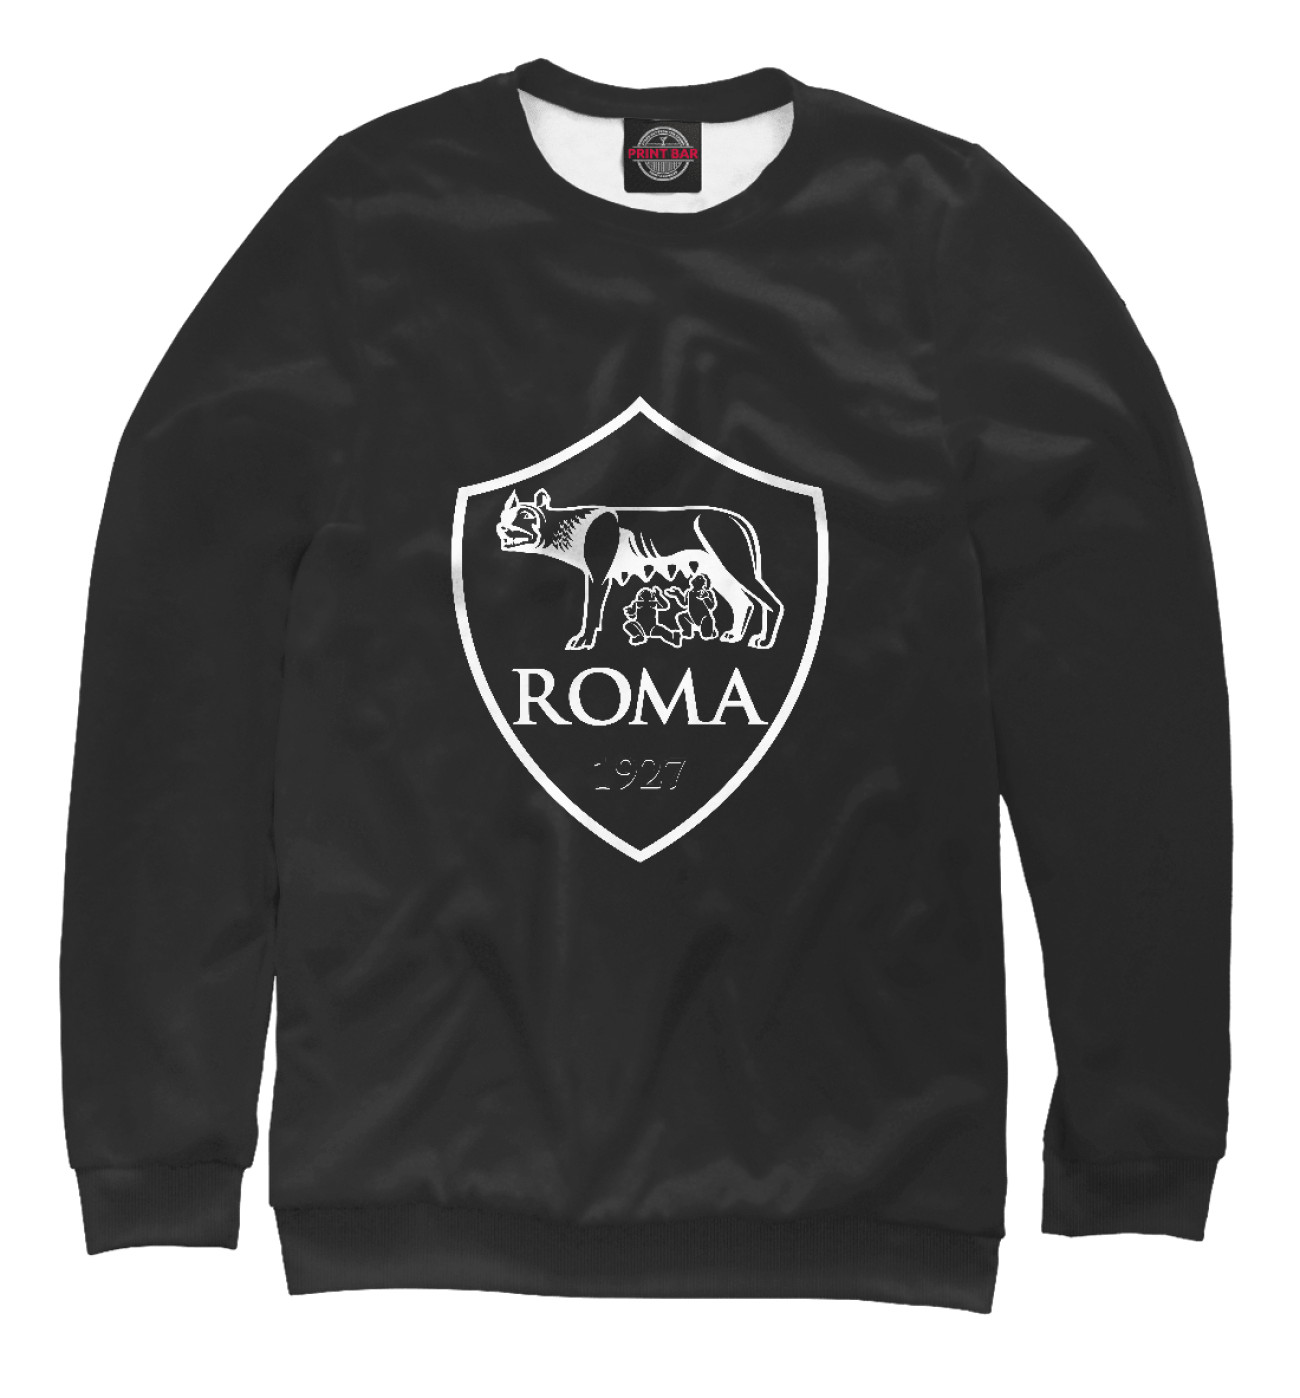 Мужской Свитшот FC ROMA Black&White, артикул: FTO-315326-swi-2